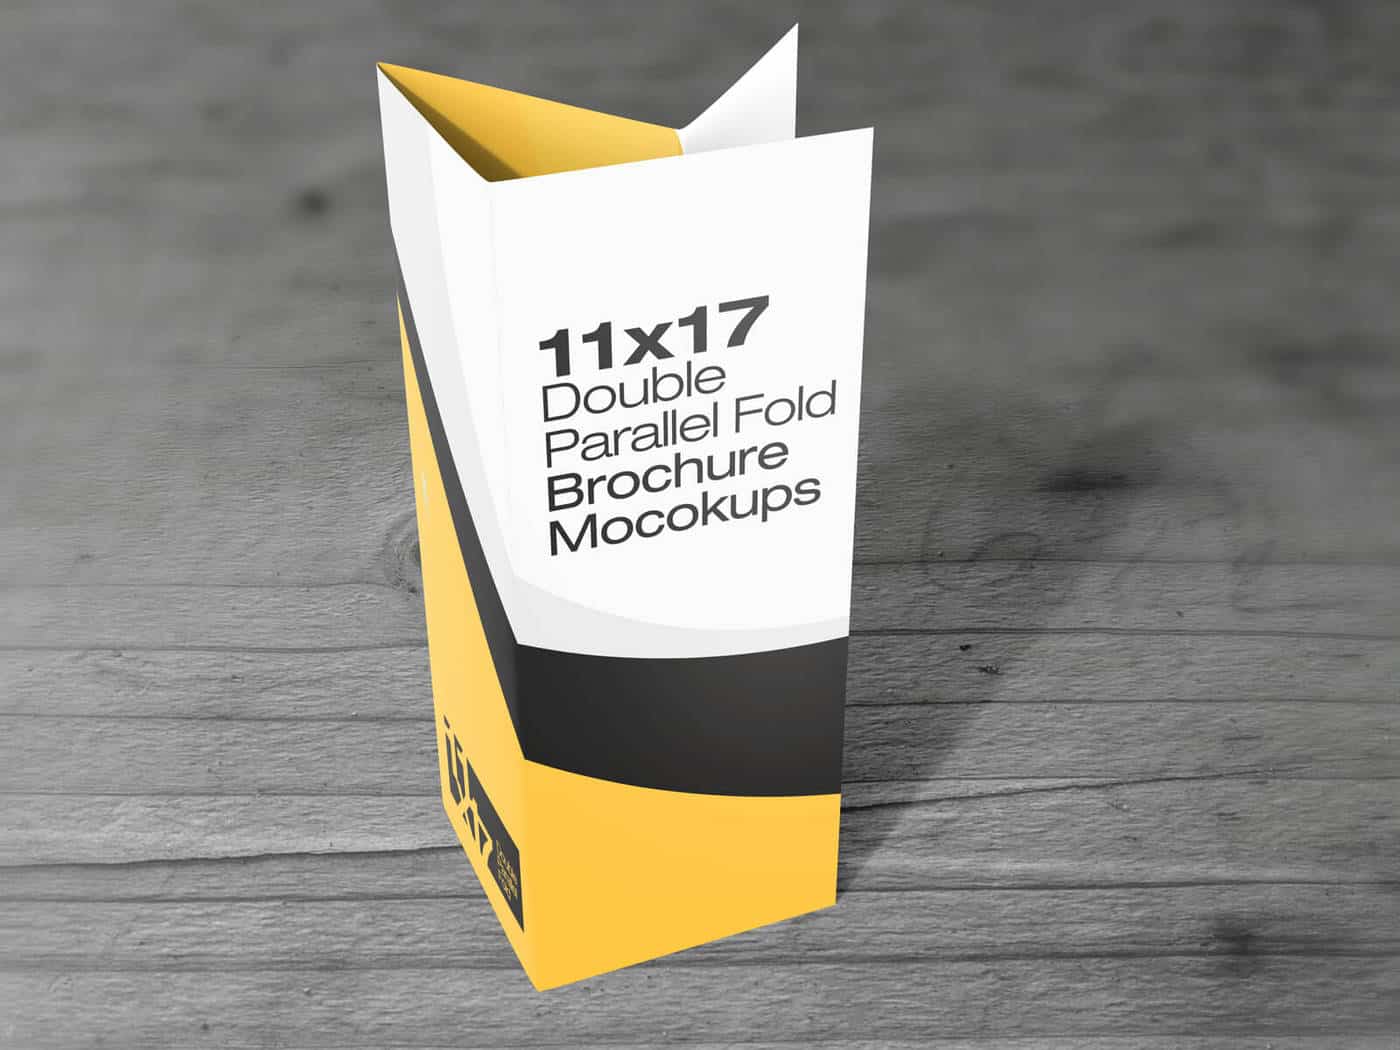  11x17 Double parallel Fold Brochure Mockups 